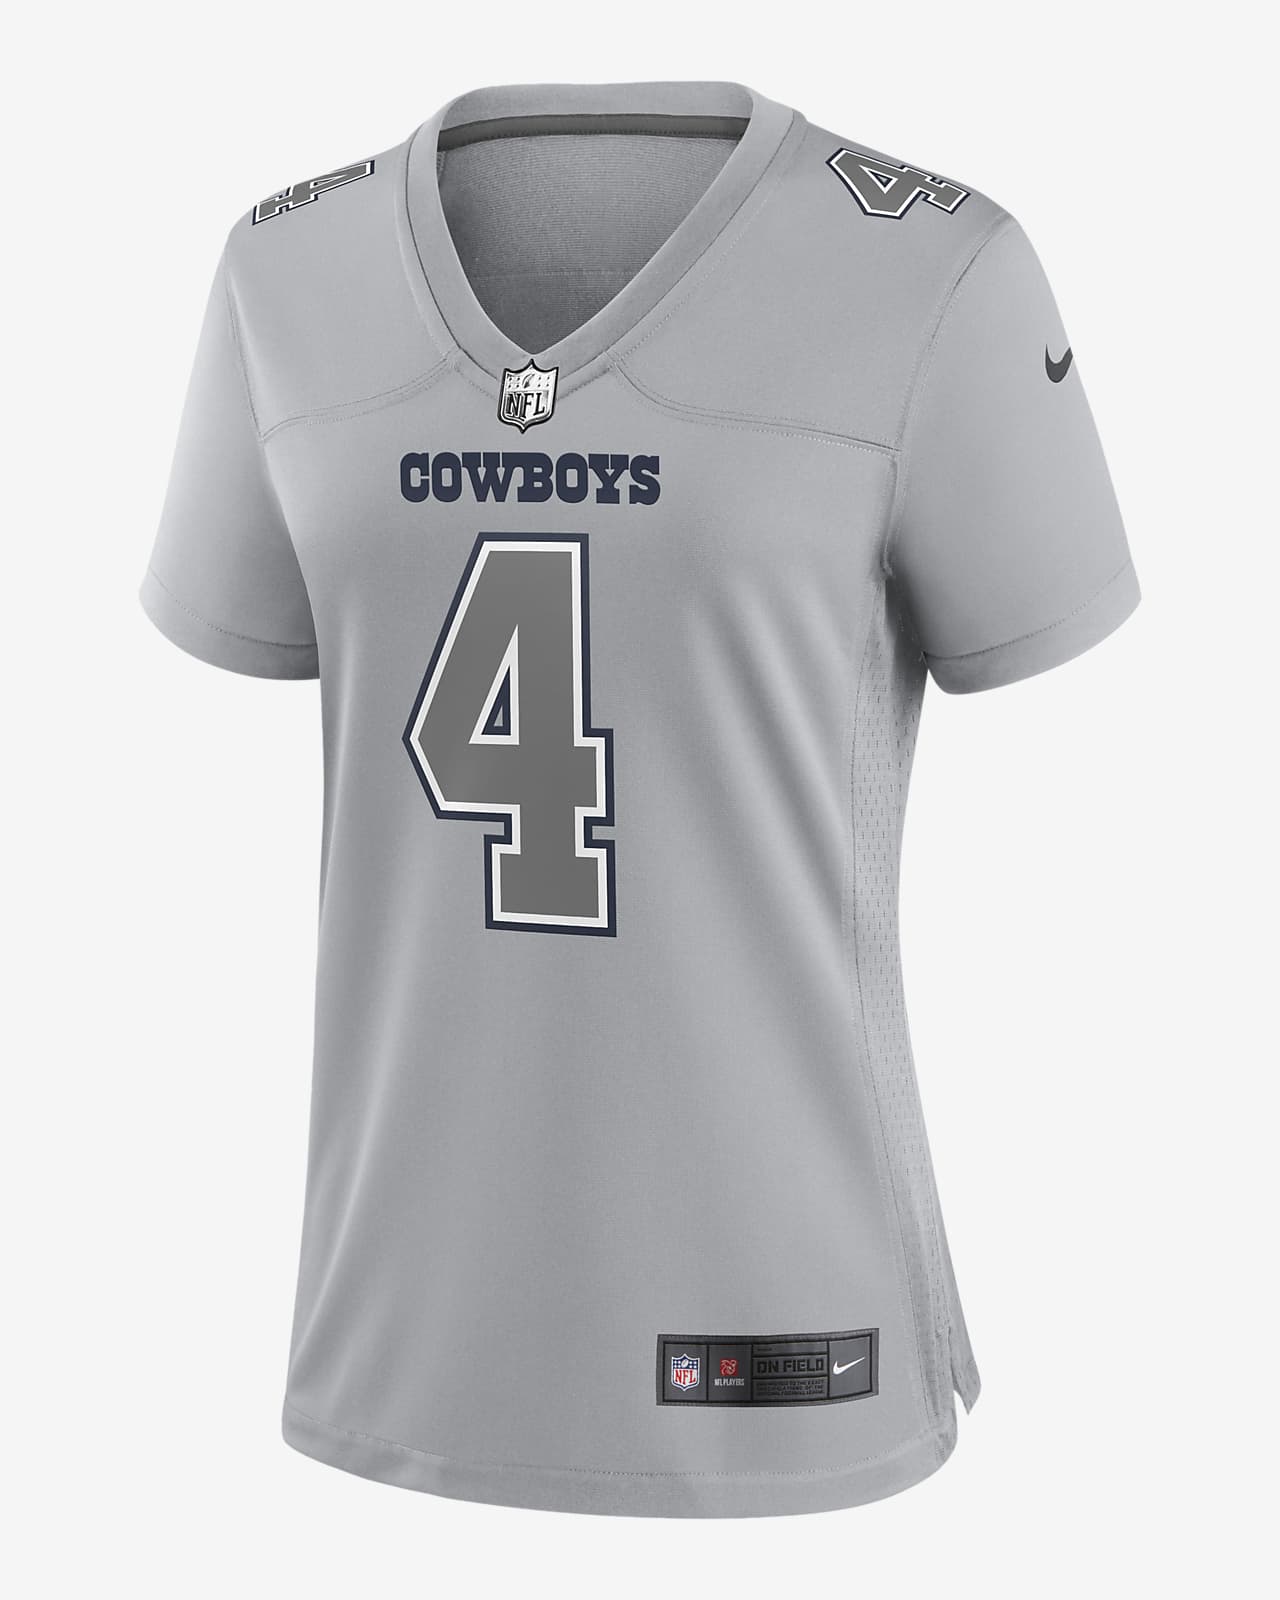 NFL Dallas Cowboys Atmosphere (Dak Prescott) Women's Fashion Football Jersey